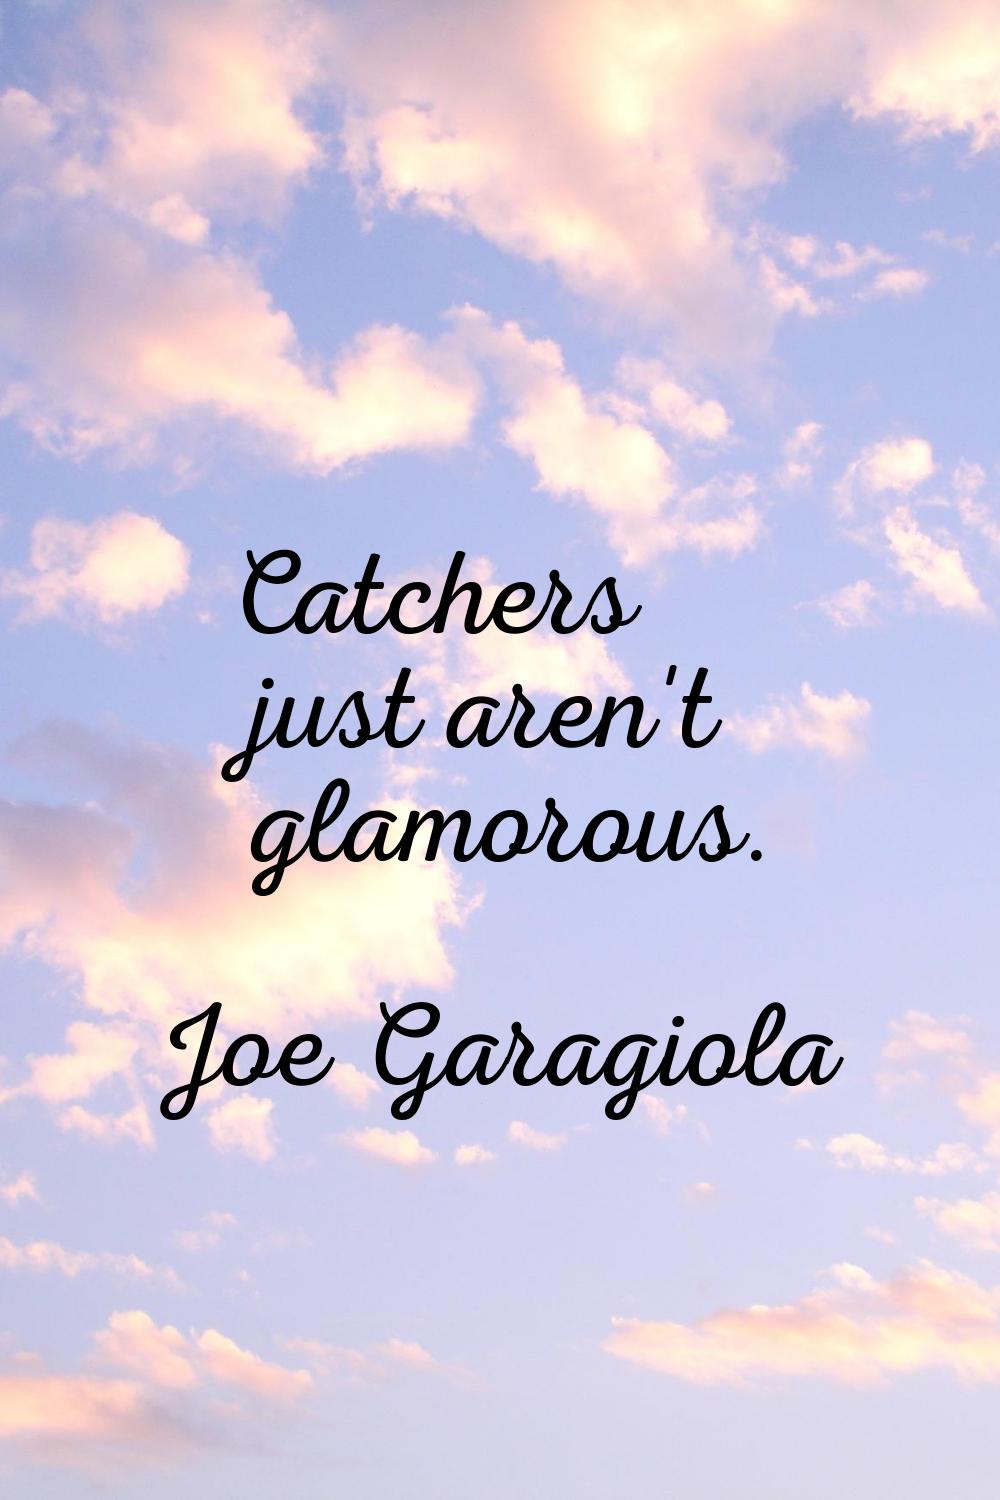 Catchers just aren't glamorous.